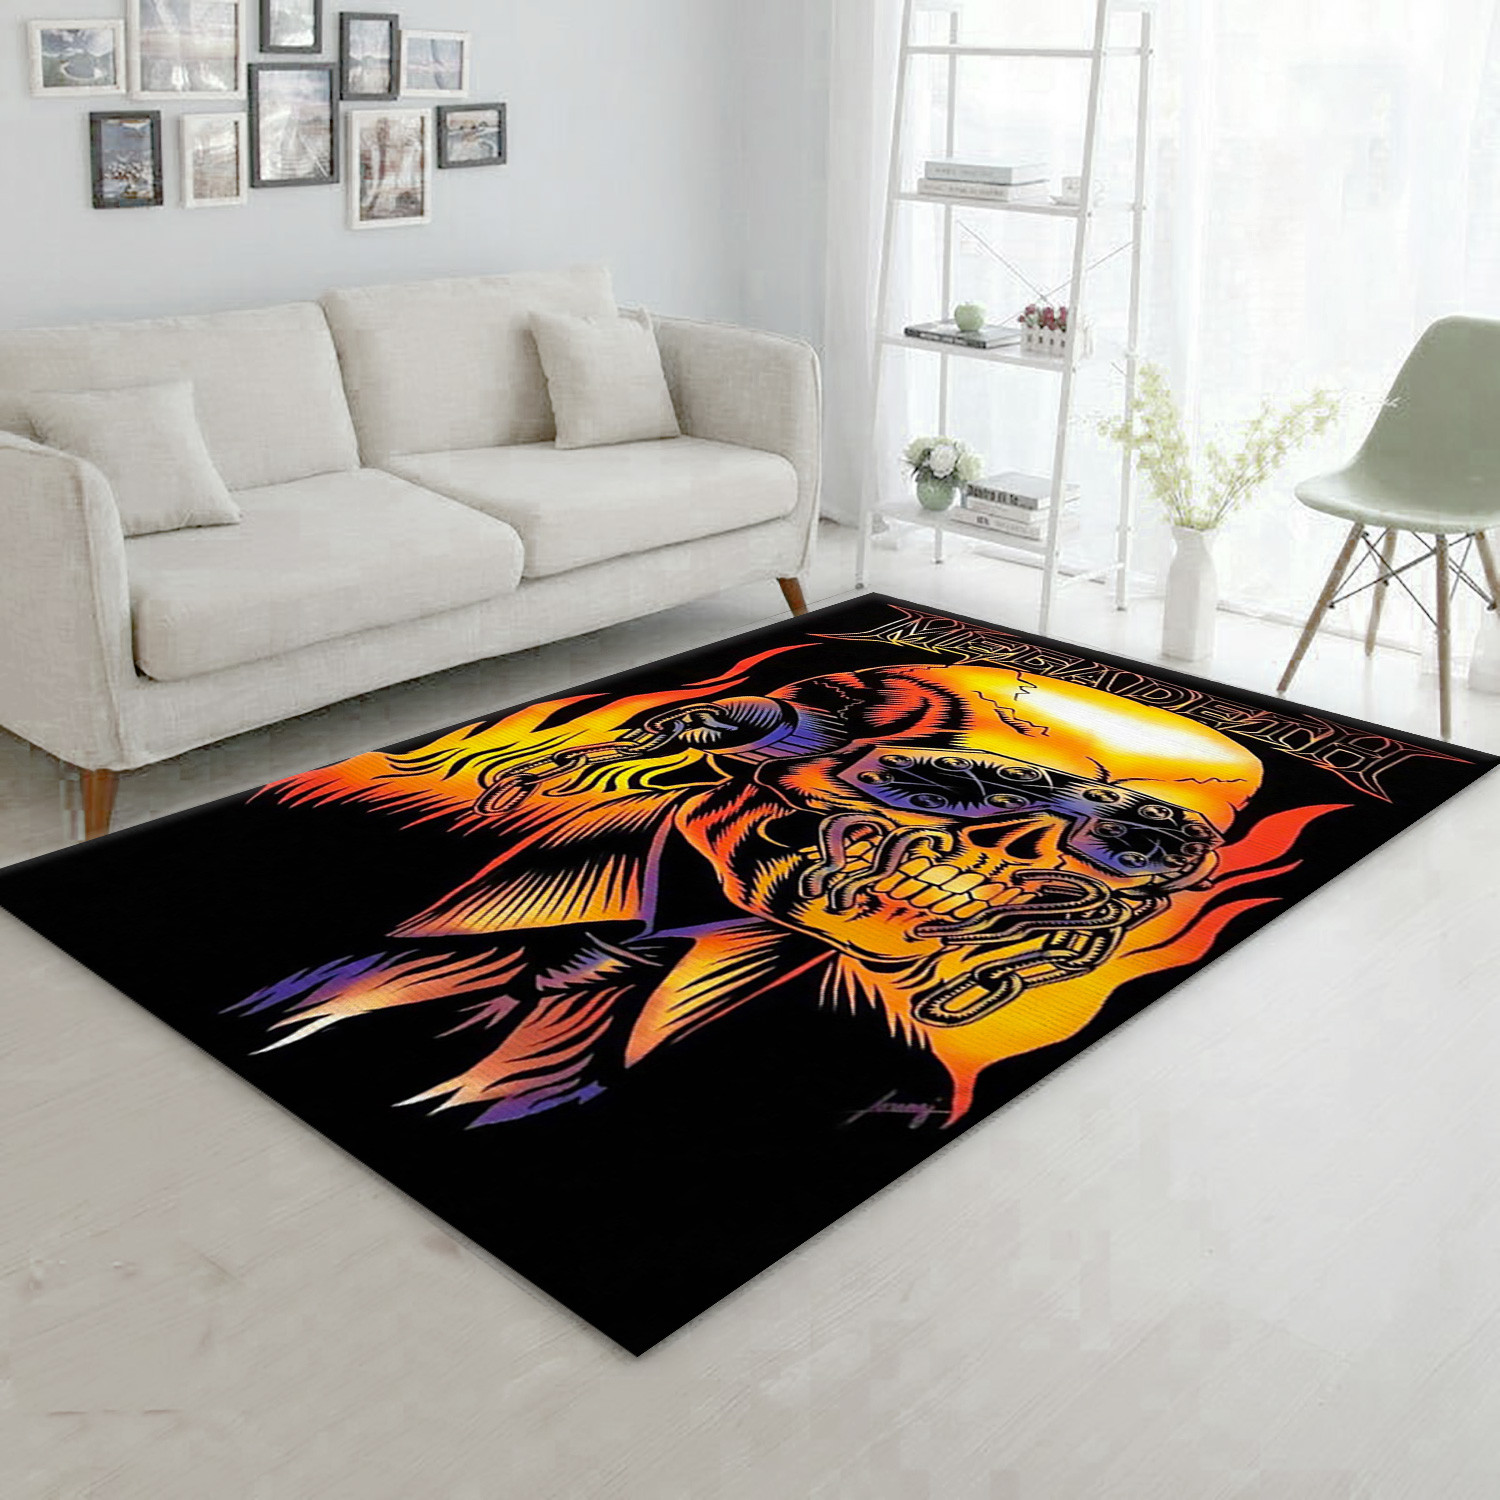 Megadeth Band Area Rug Music Floor Decor Carpet Titles 2